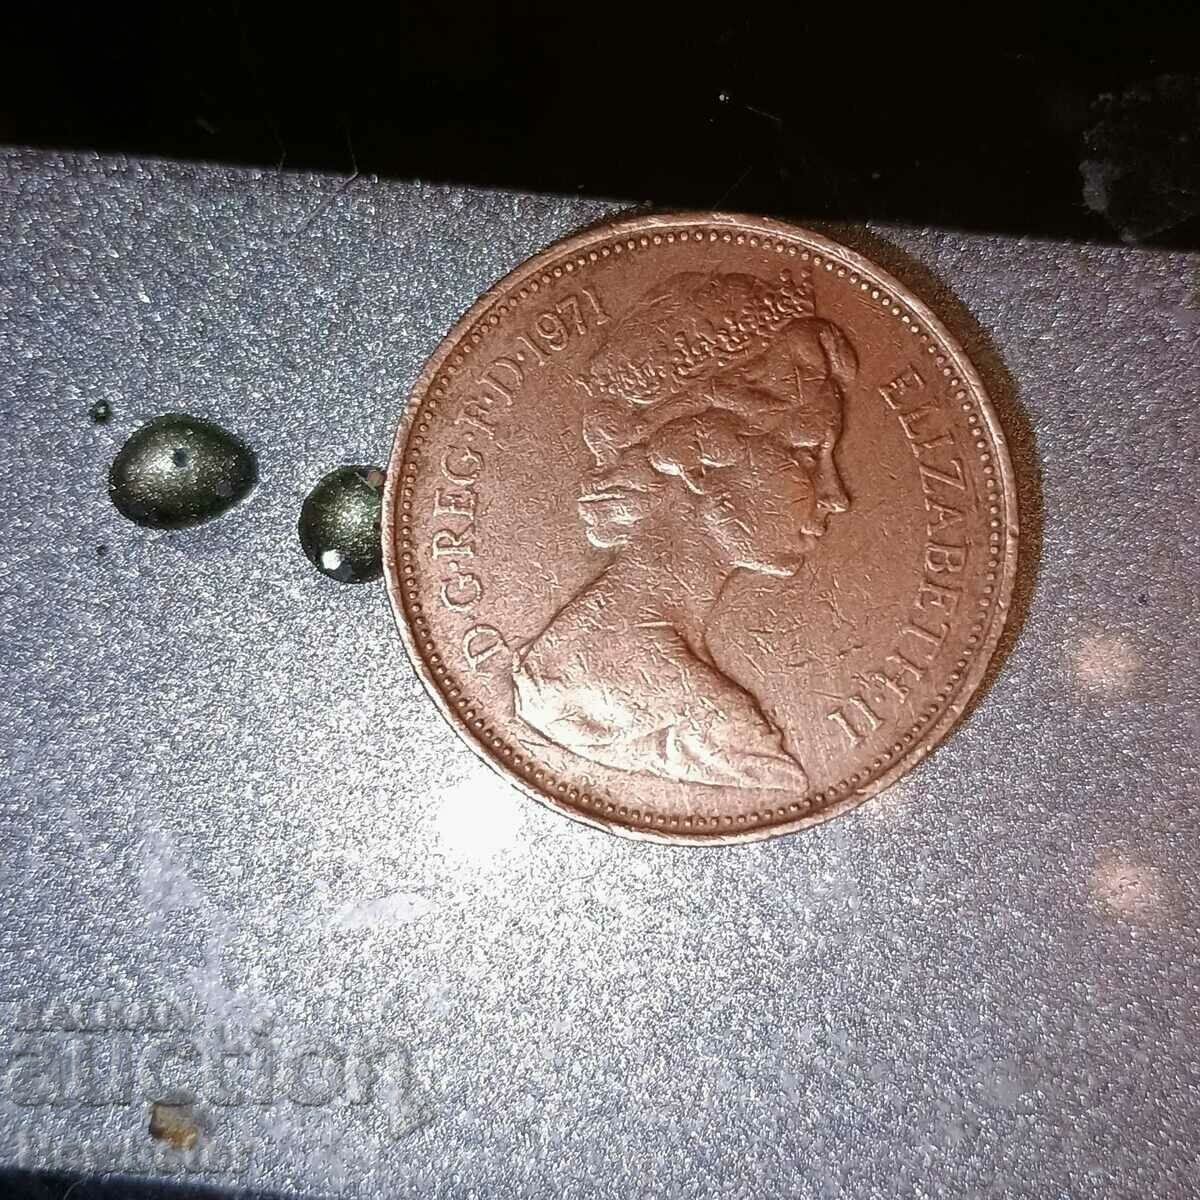 2 new pence 1971 Queen Elizabeth ll